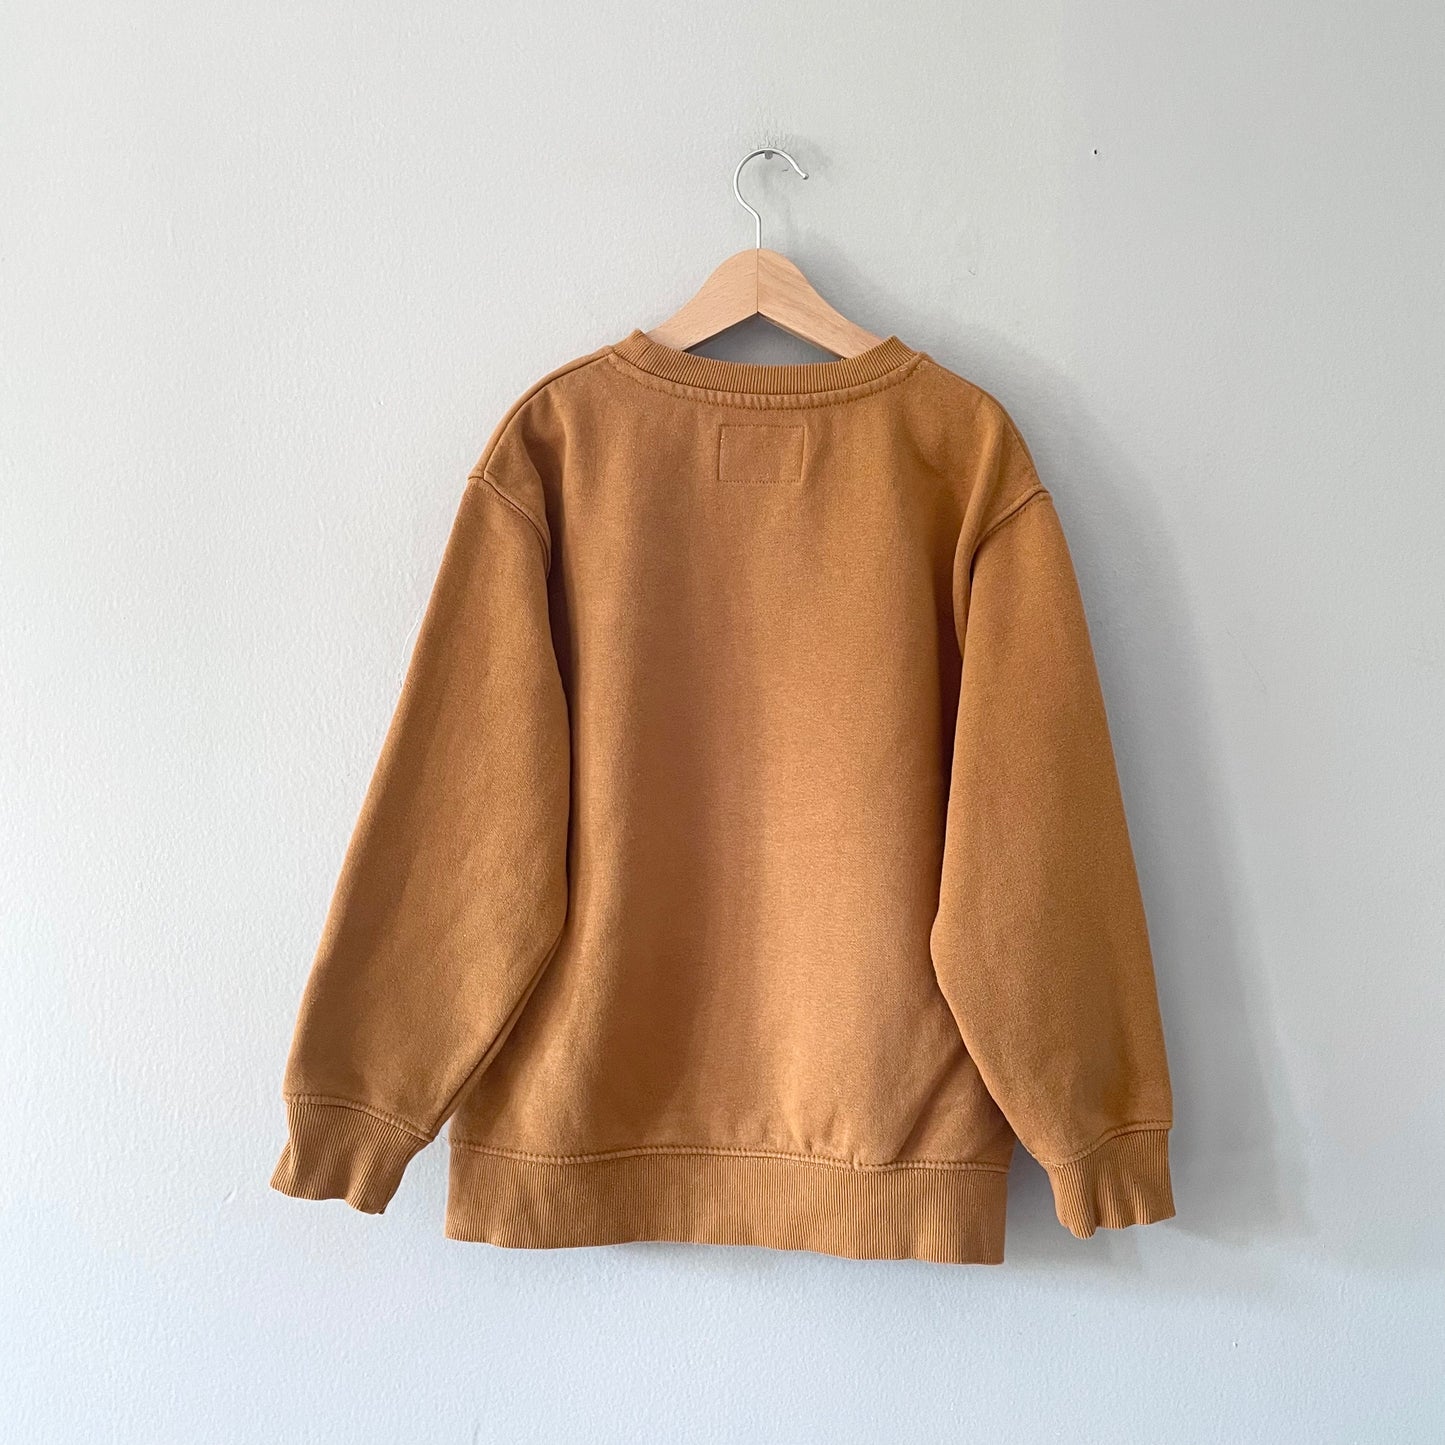 Zara / A cool idea sweatshirt / 8Y